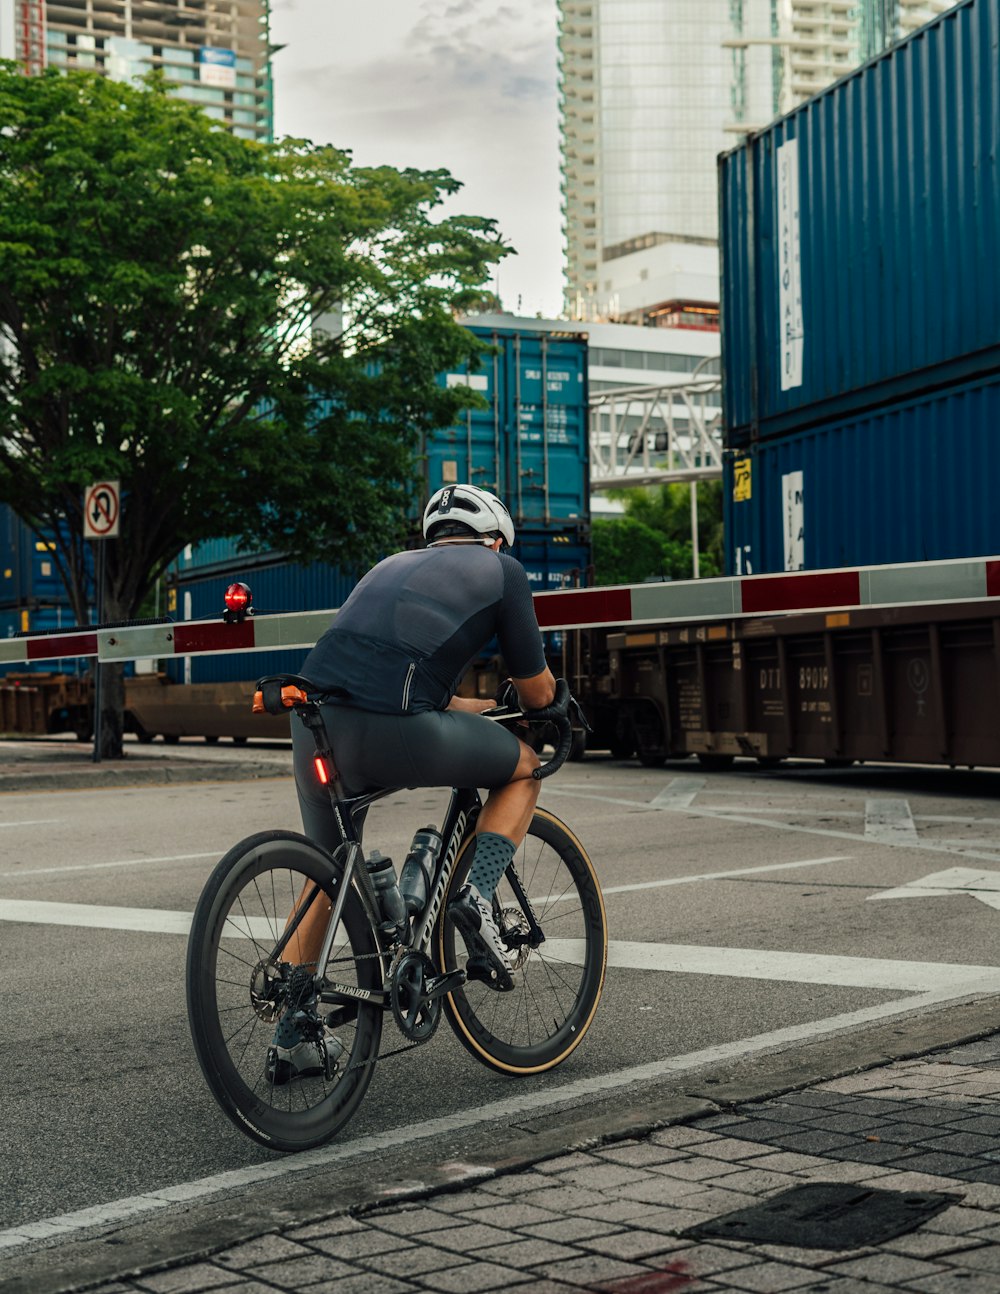 a man riding a bike down a street next to a train